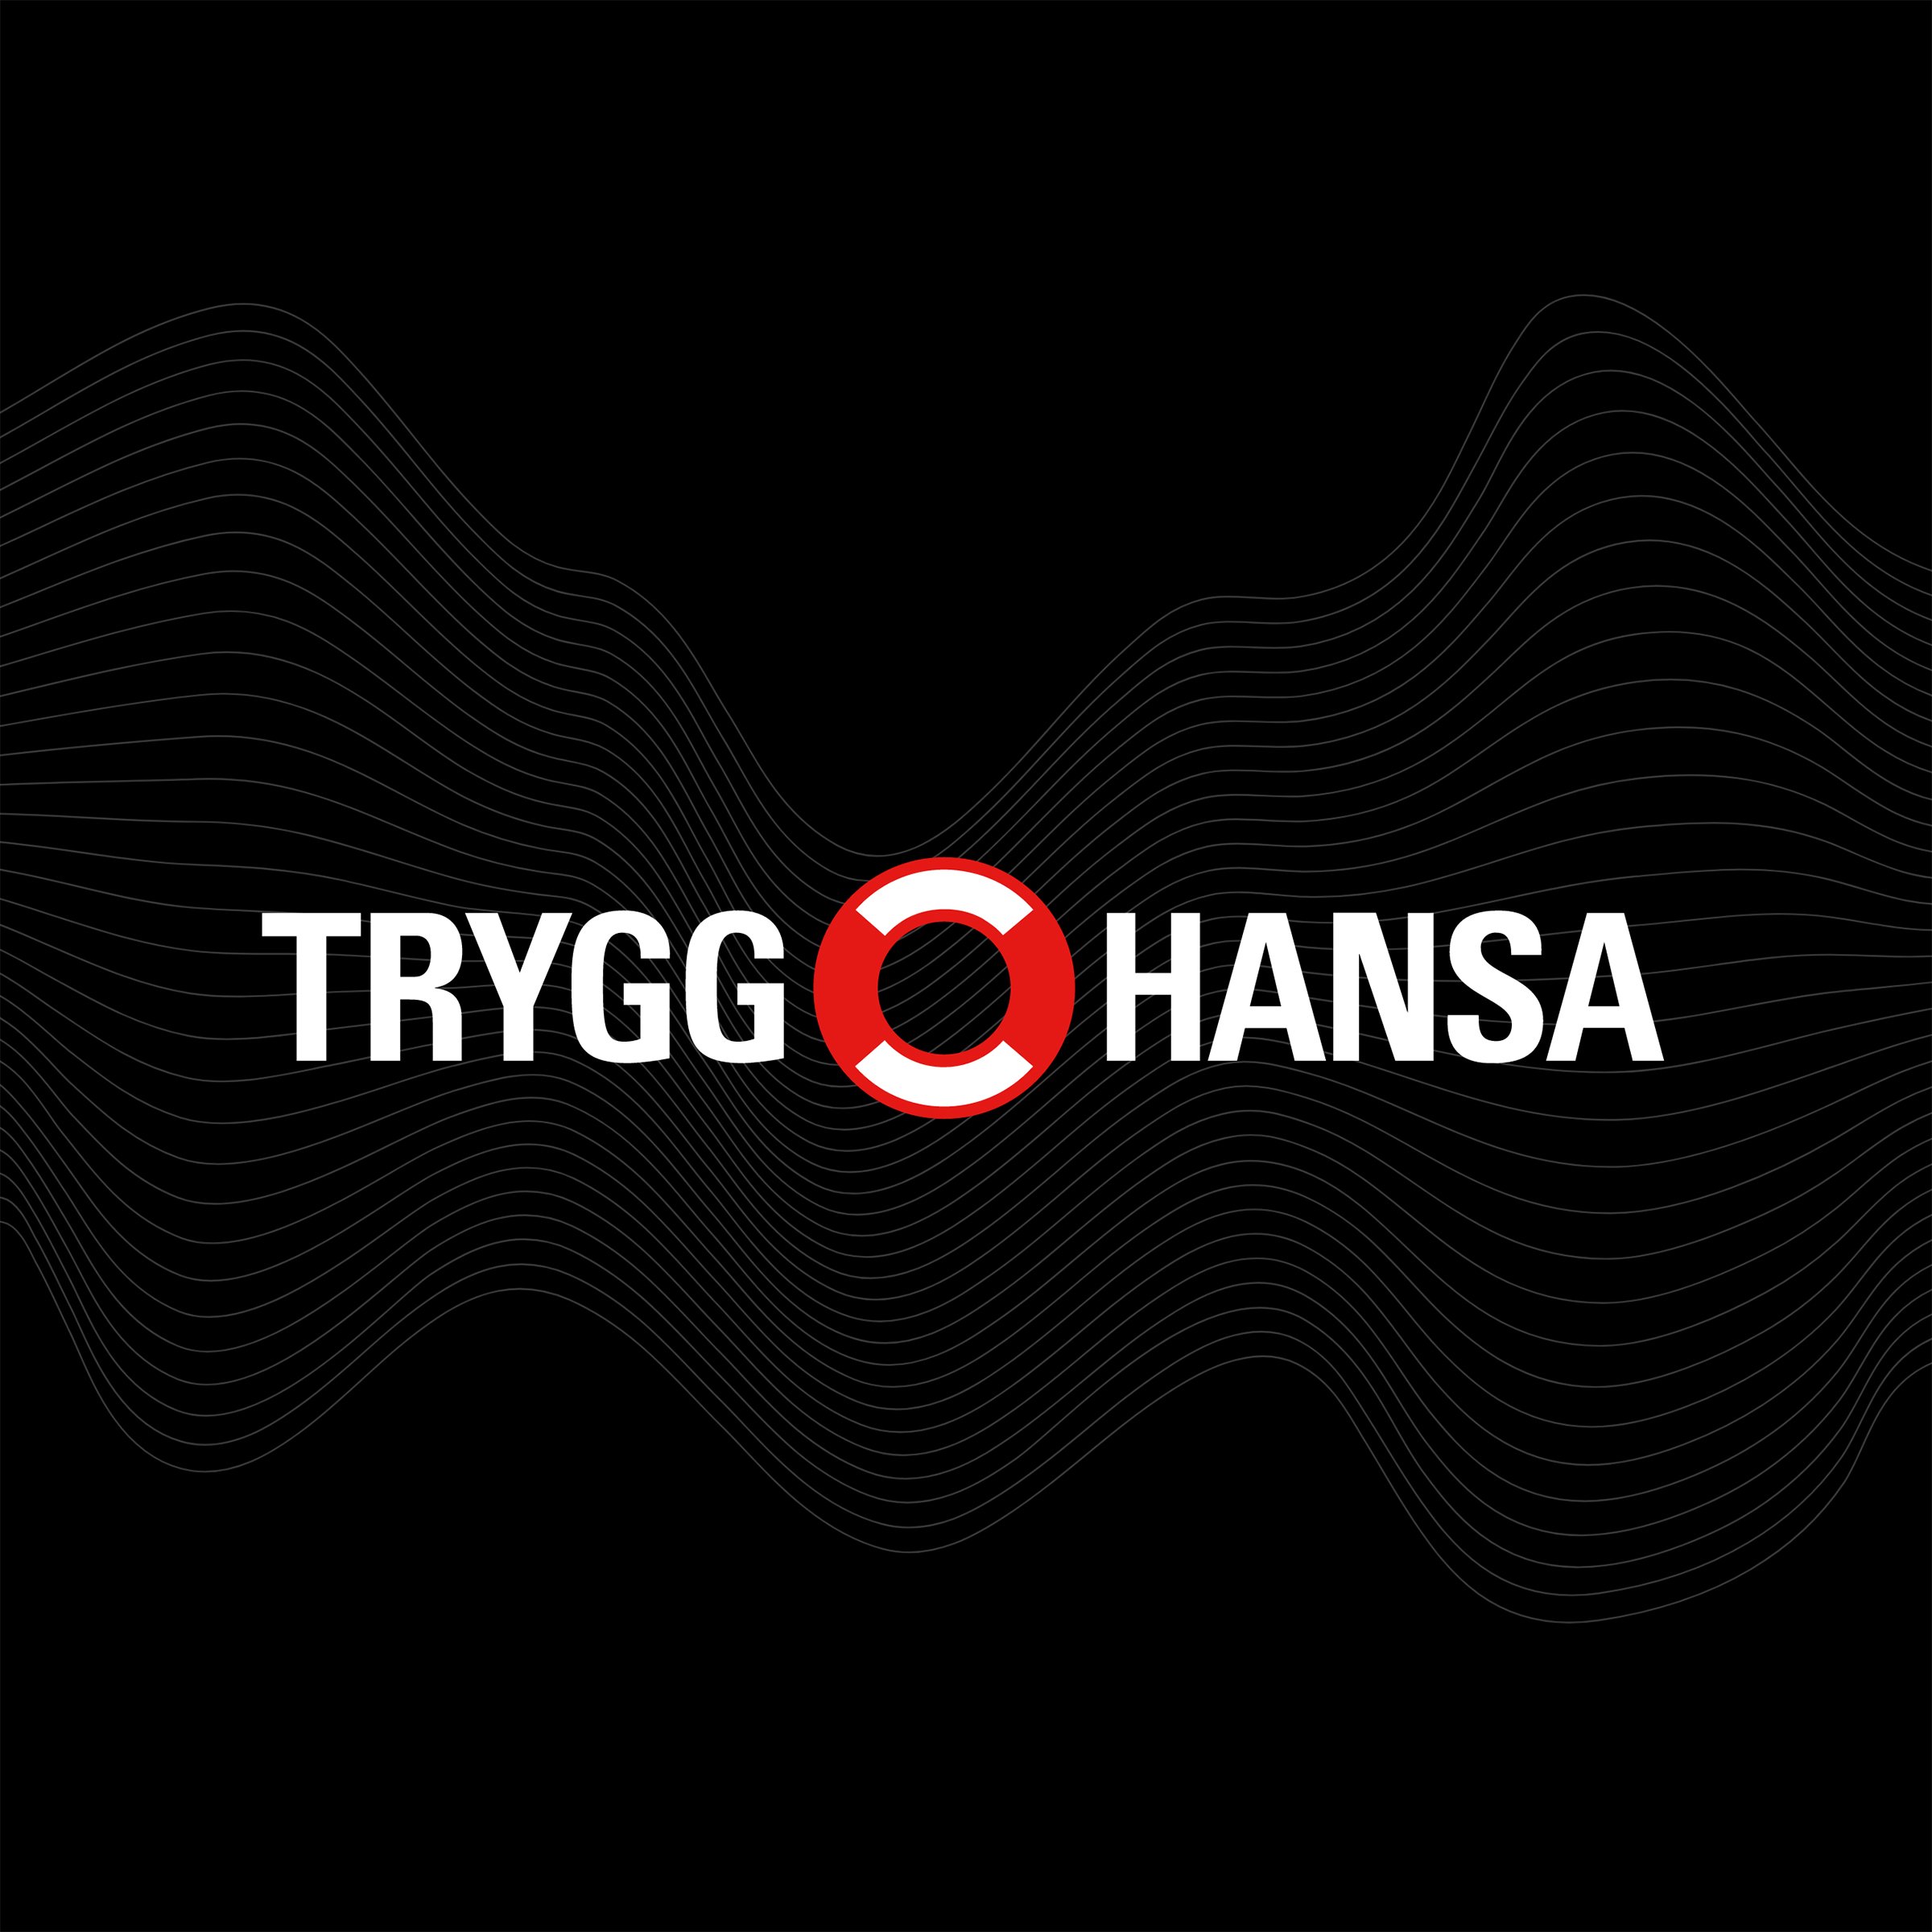 Trygghansa – logo